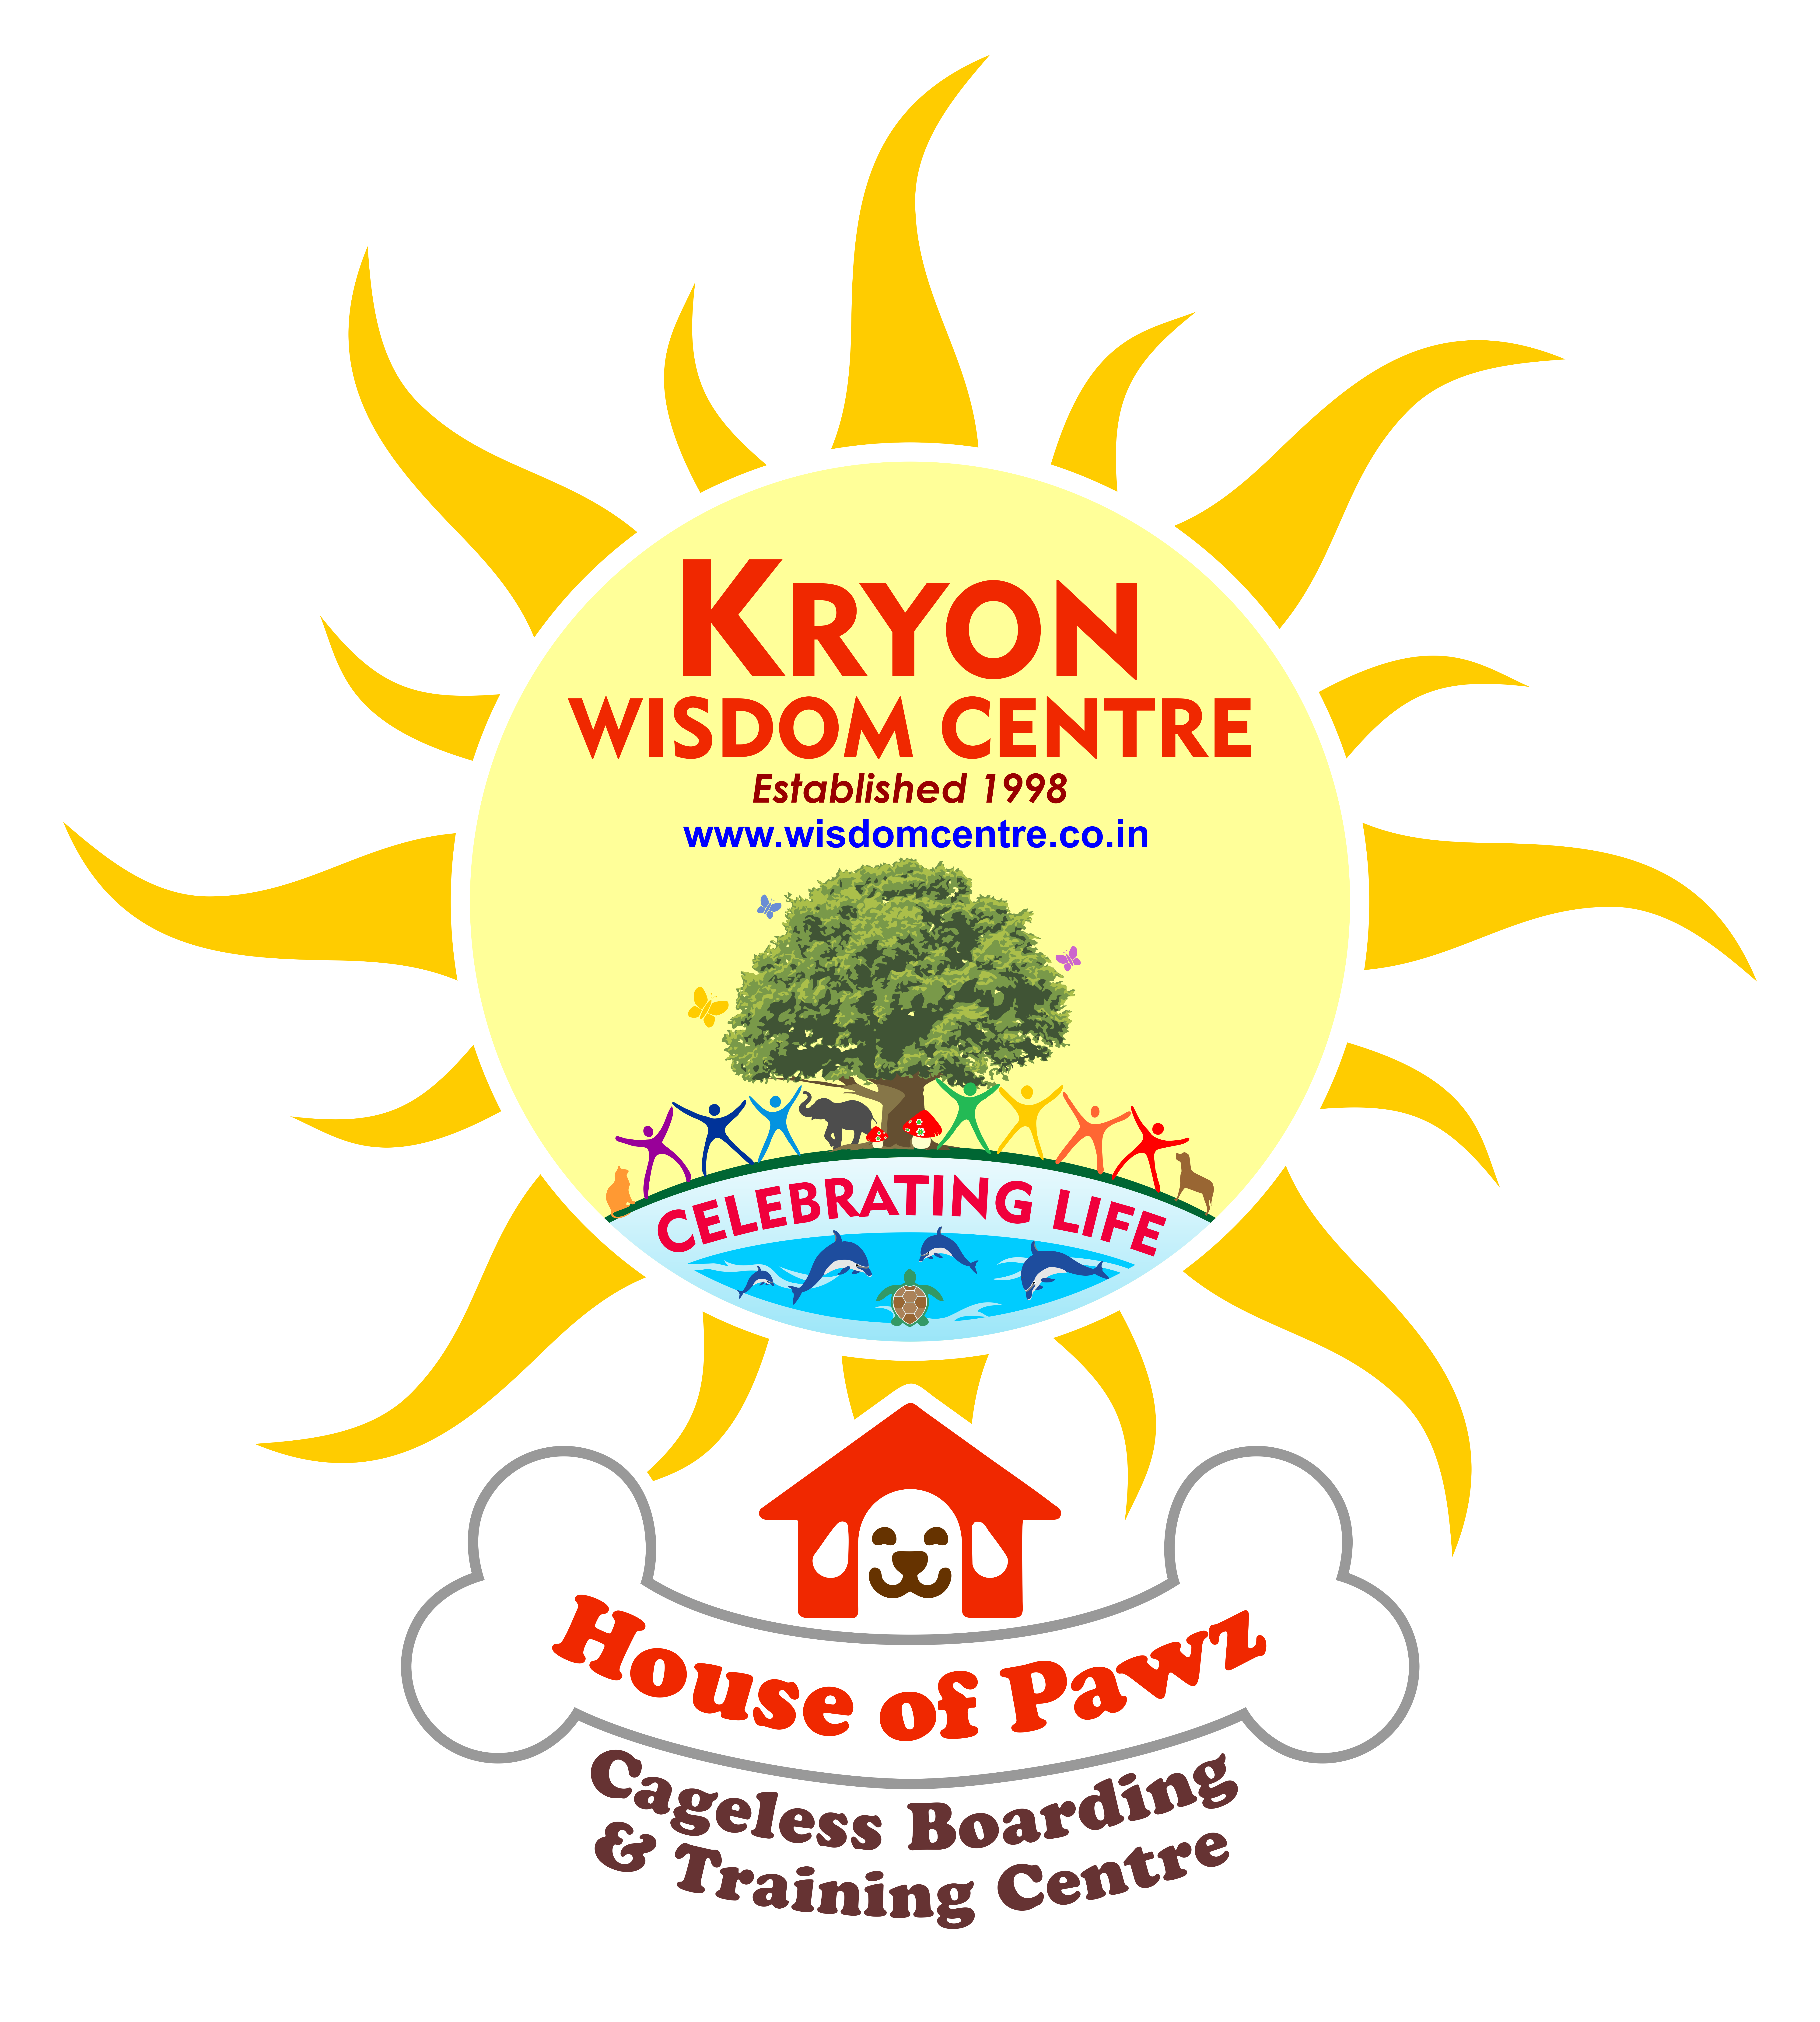 Kryon Wisdom Centre